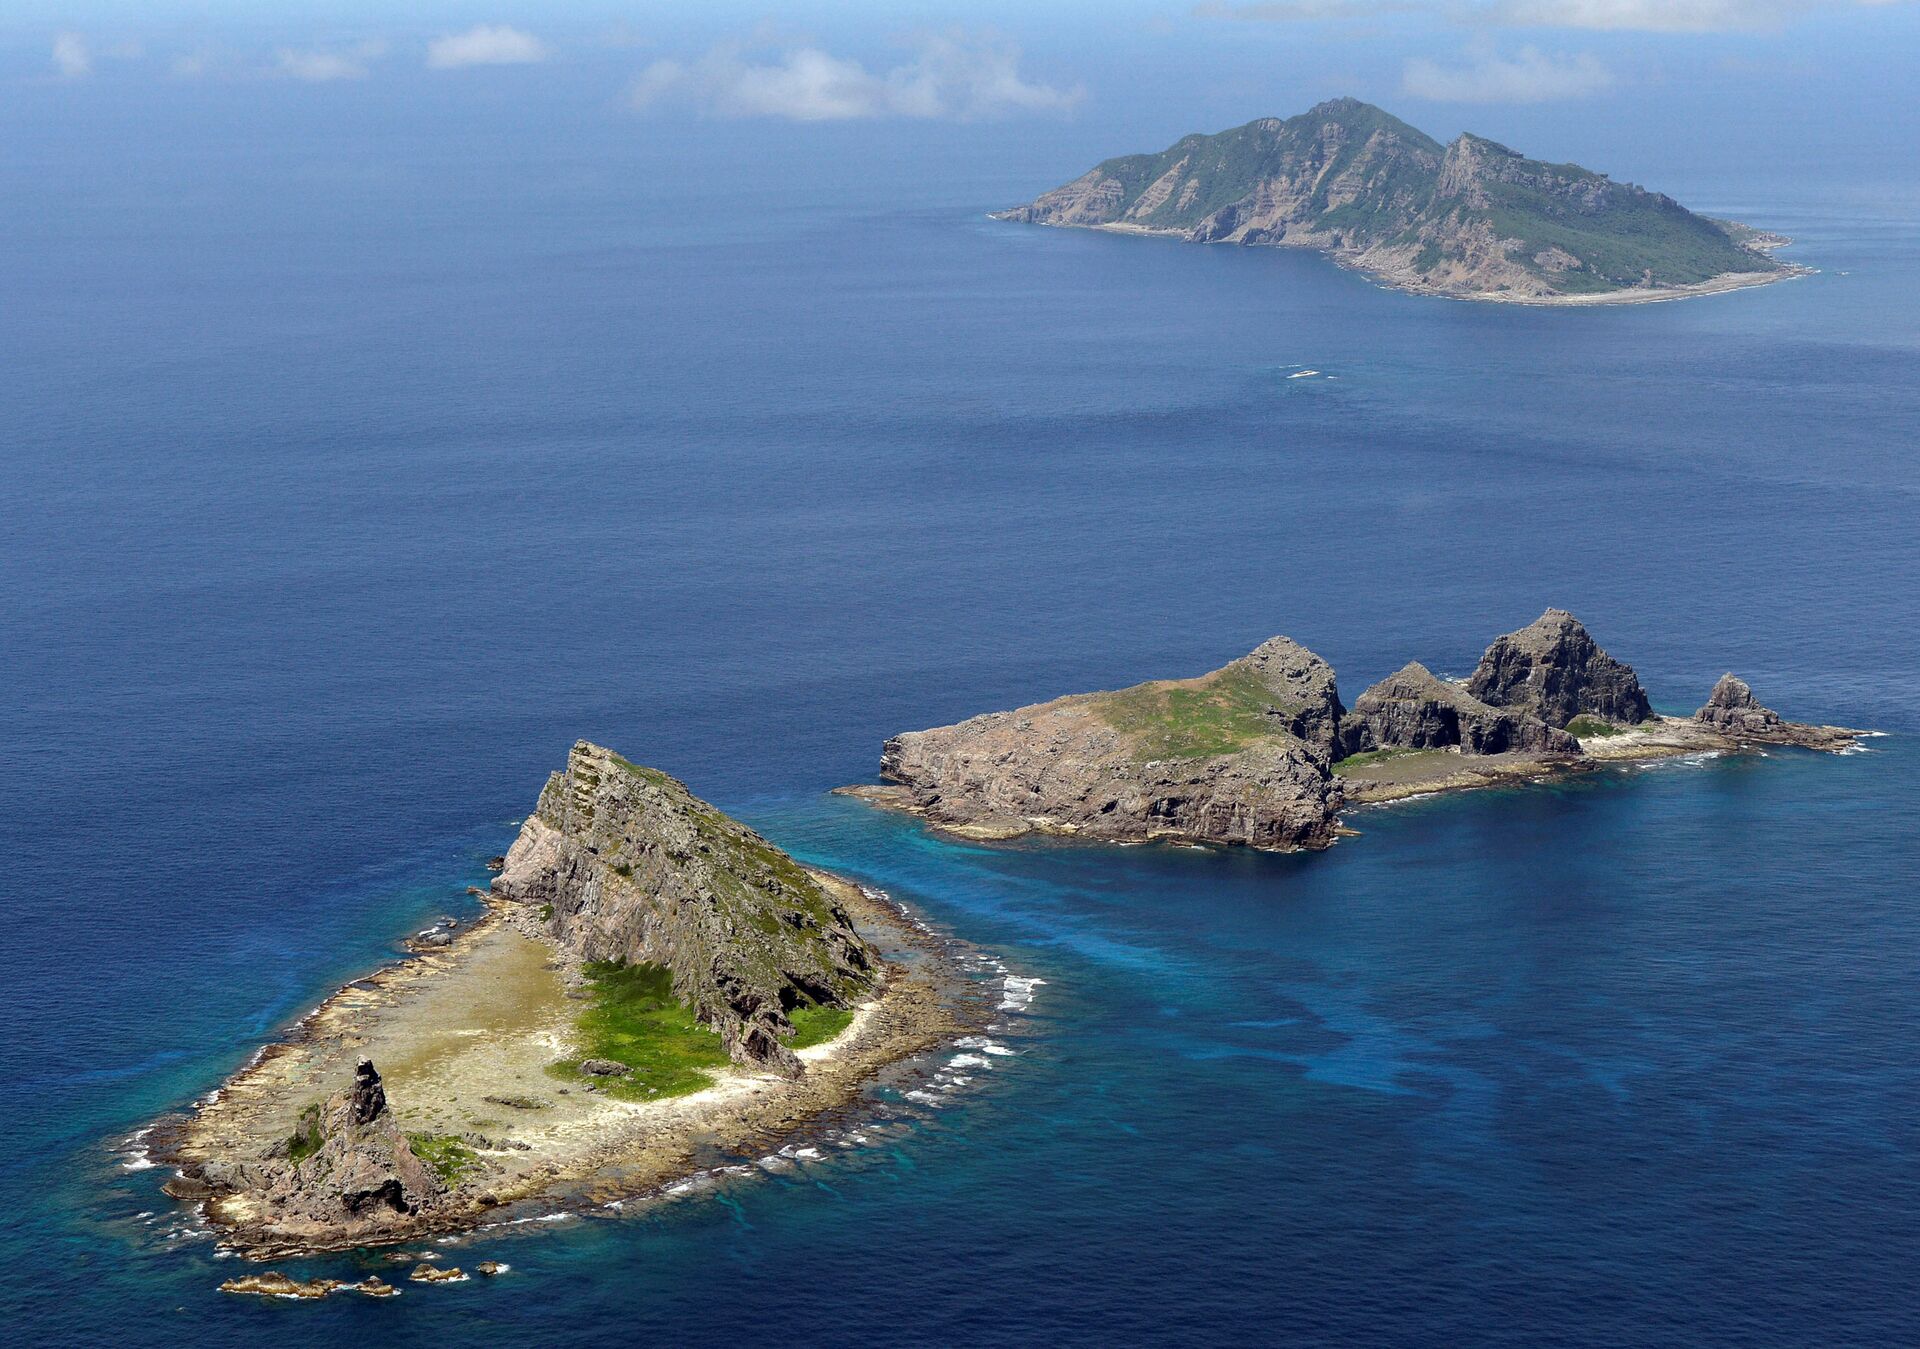 Grupo de ilhas disputadas no mar do Sul da China: Uotsuri, Minamikojima e Kitakojima denominados Senkaku no Japão e Diaoyu na China (foto de arquivo) - Sputnik Brasil, 1920, 27.12.2021